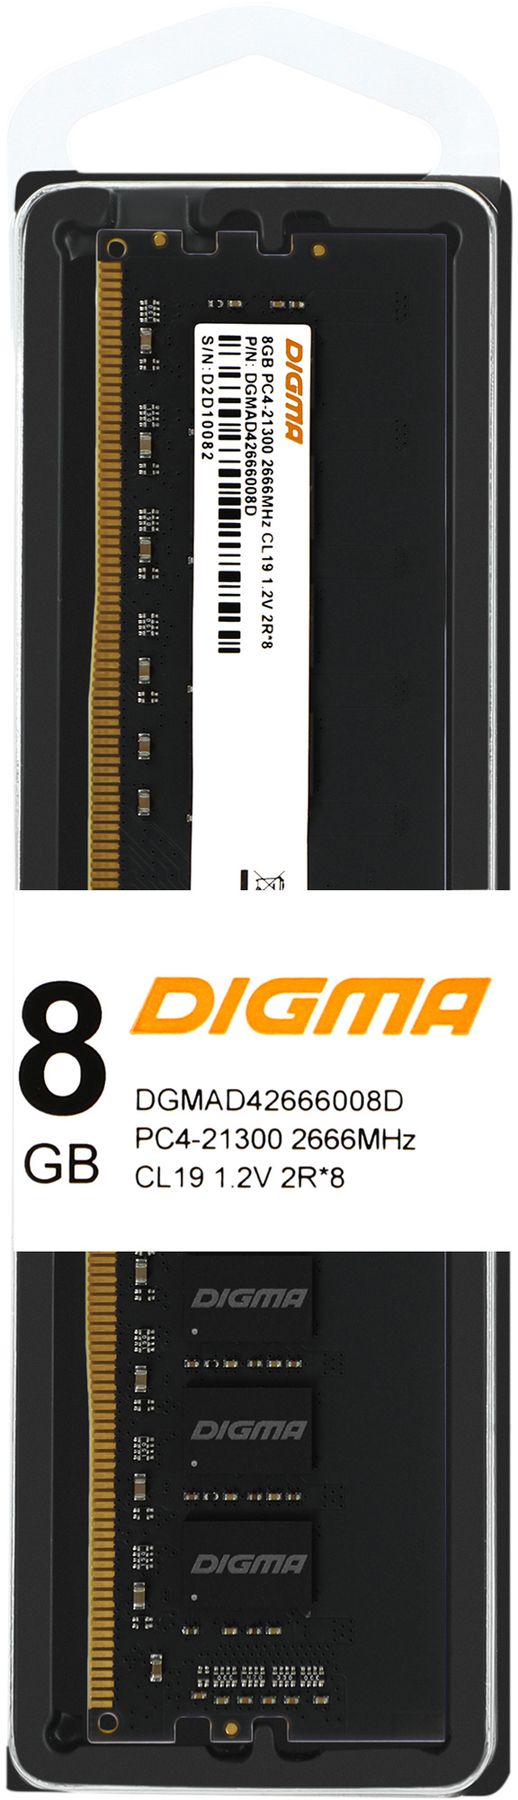 Оперативная память DDR4 Digma 8Gb 2666MHz DIMM (DGMAD42666008D) цена и фото